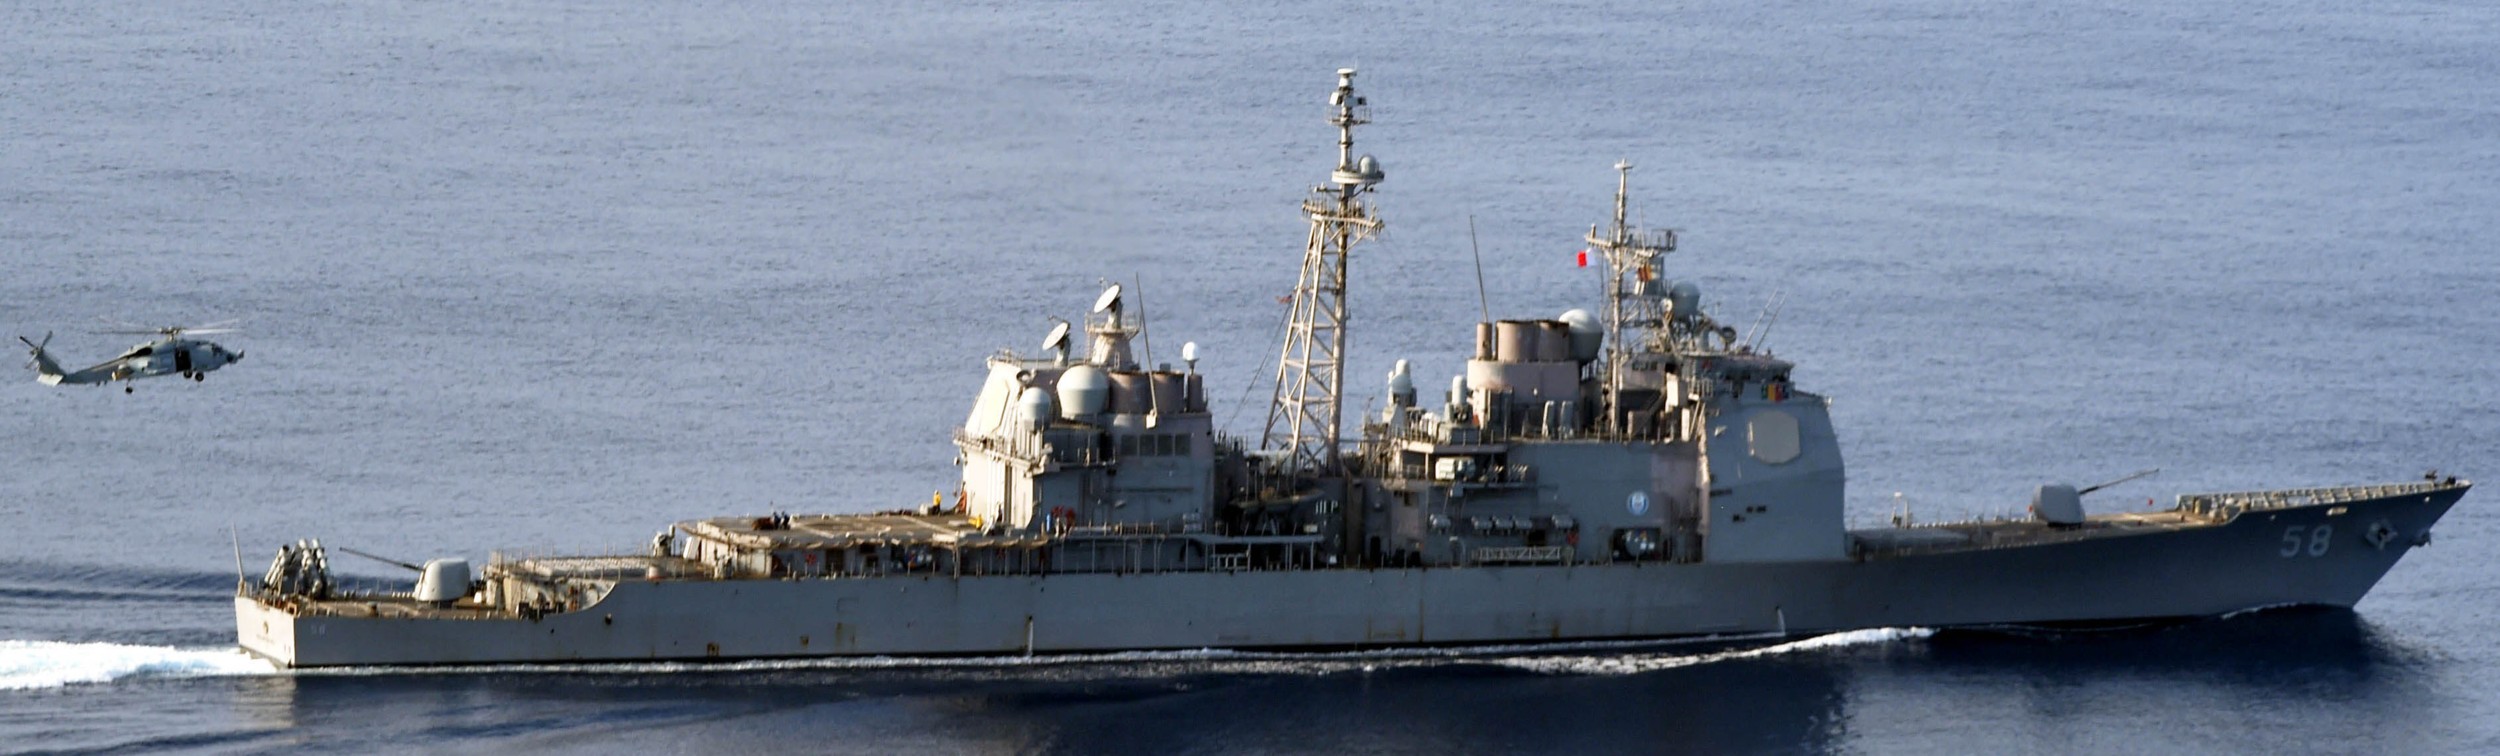 cg-58 uss philippine sea ticonderoga class guided missile cruiser aegis us navy 61